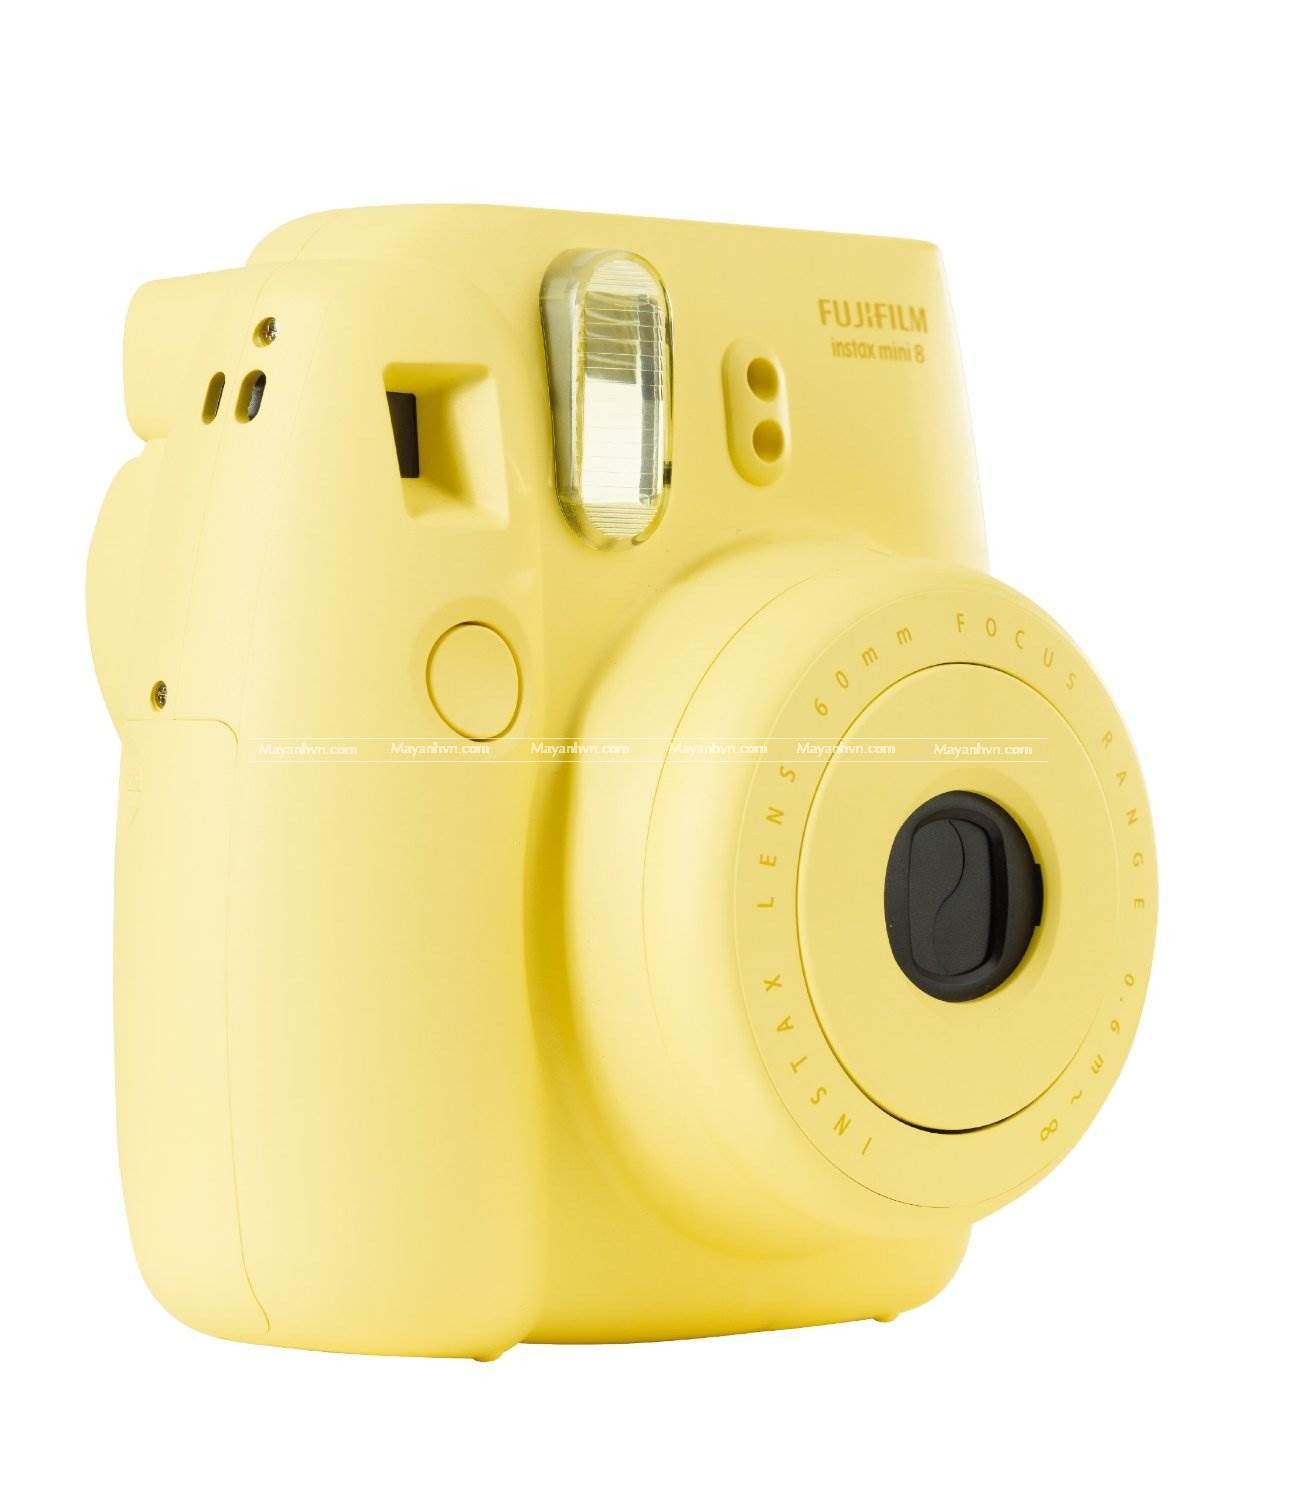 Fujifilm Instax mini 8 Yellow